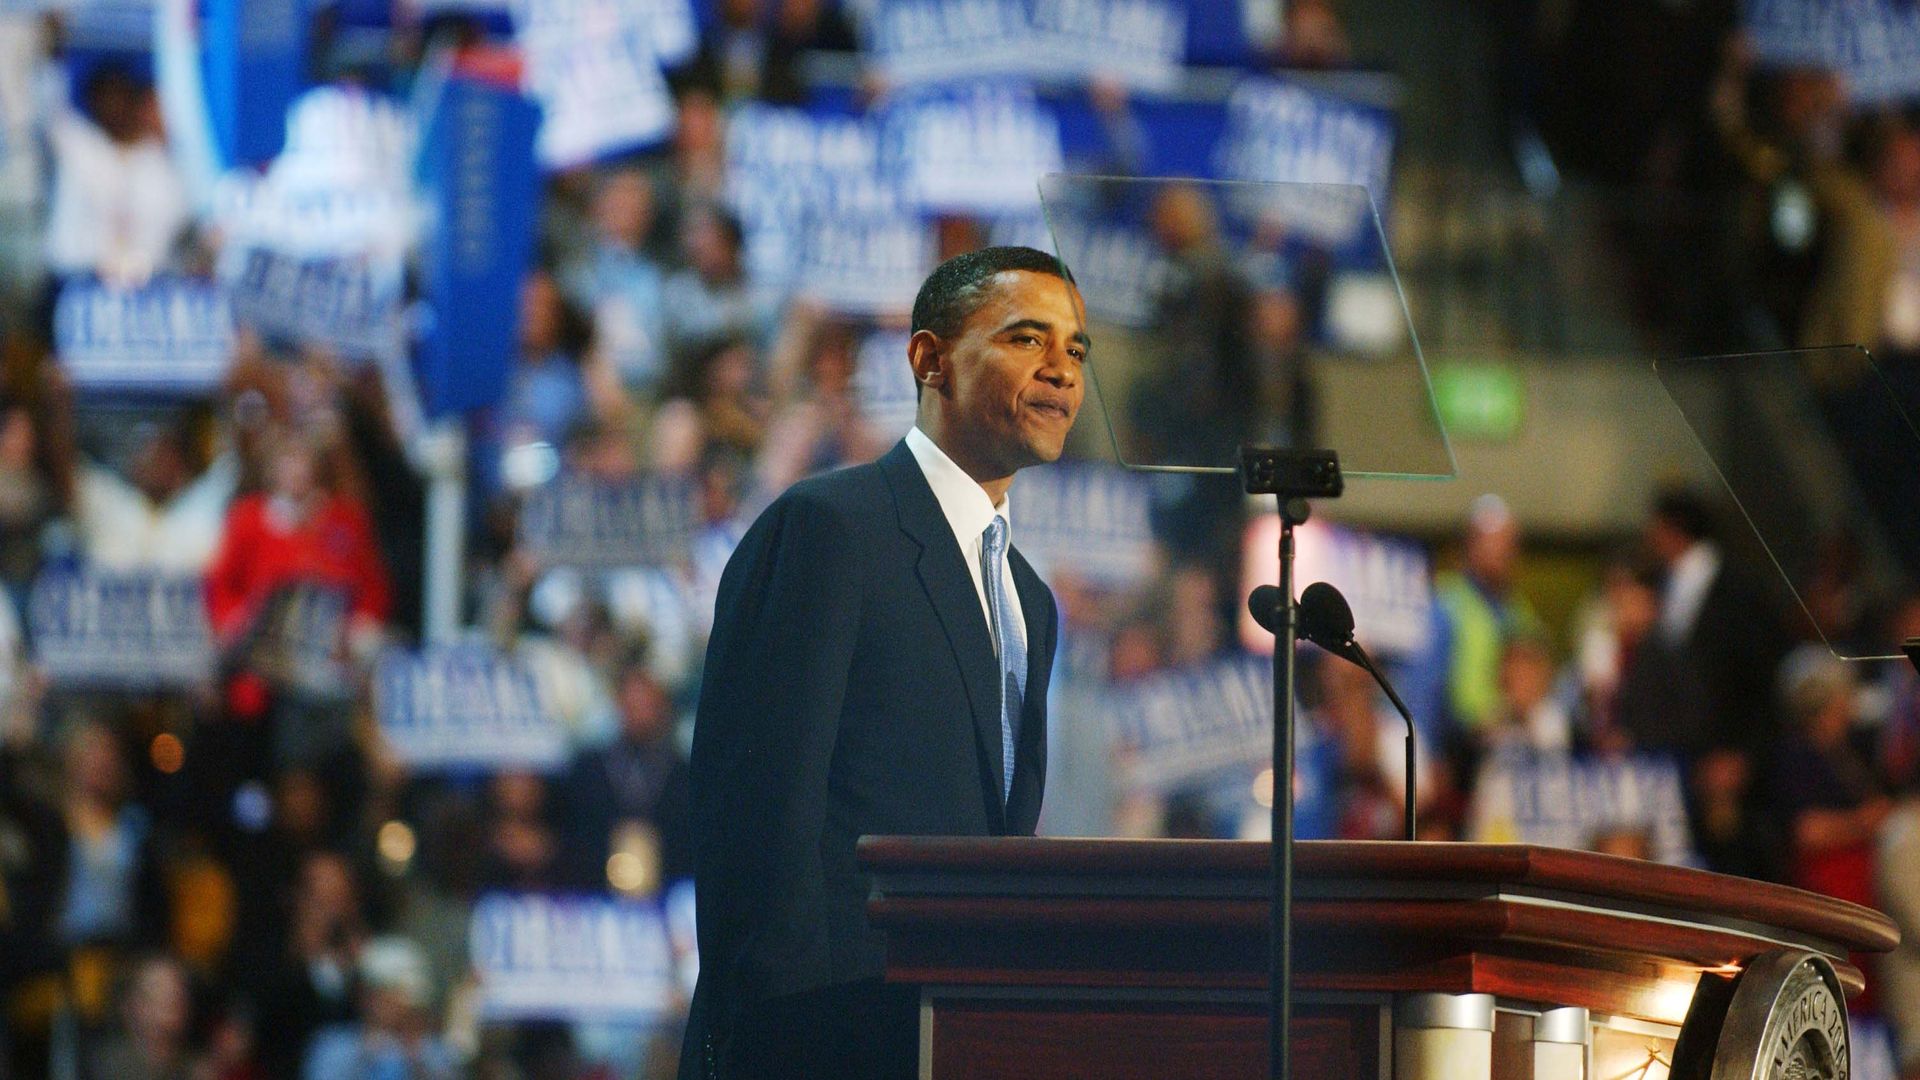 Barack Obama at 2004 convention